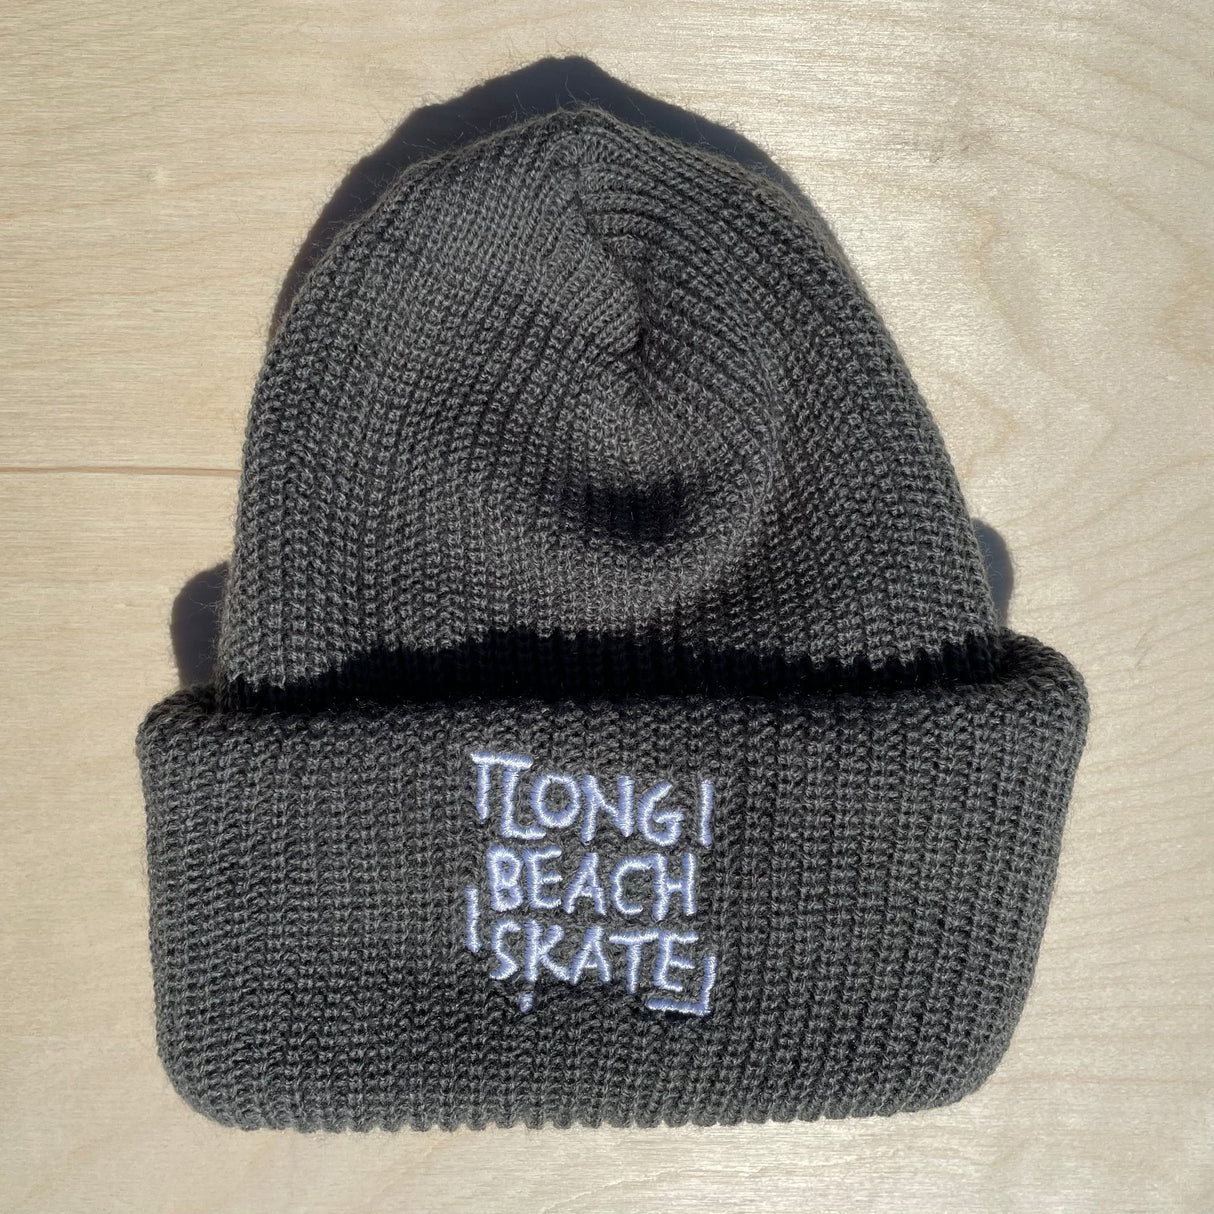 Long Beach Skate Co. Grunge Grey Watch Cap Beanie